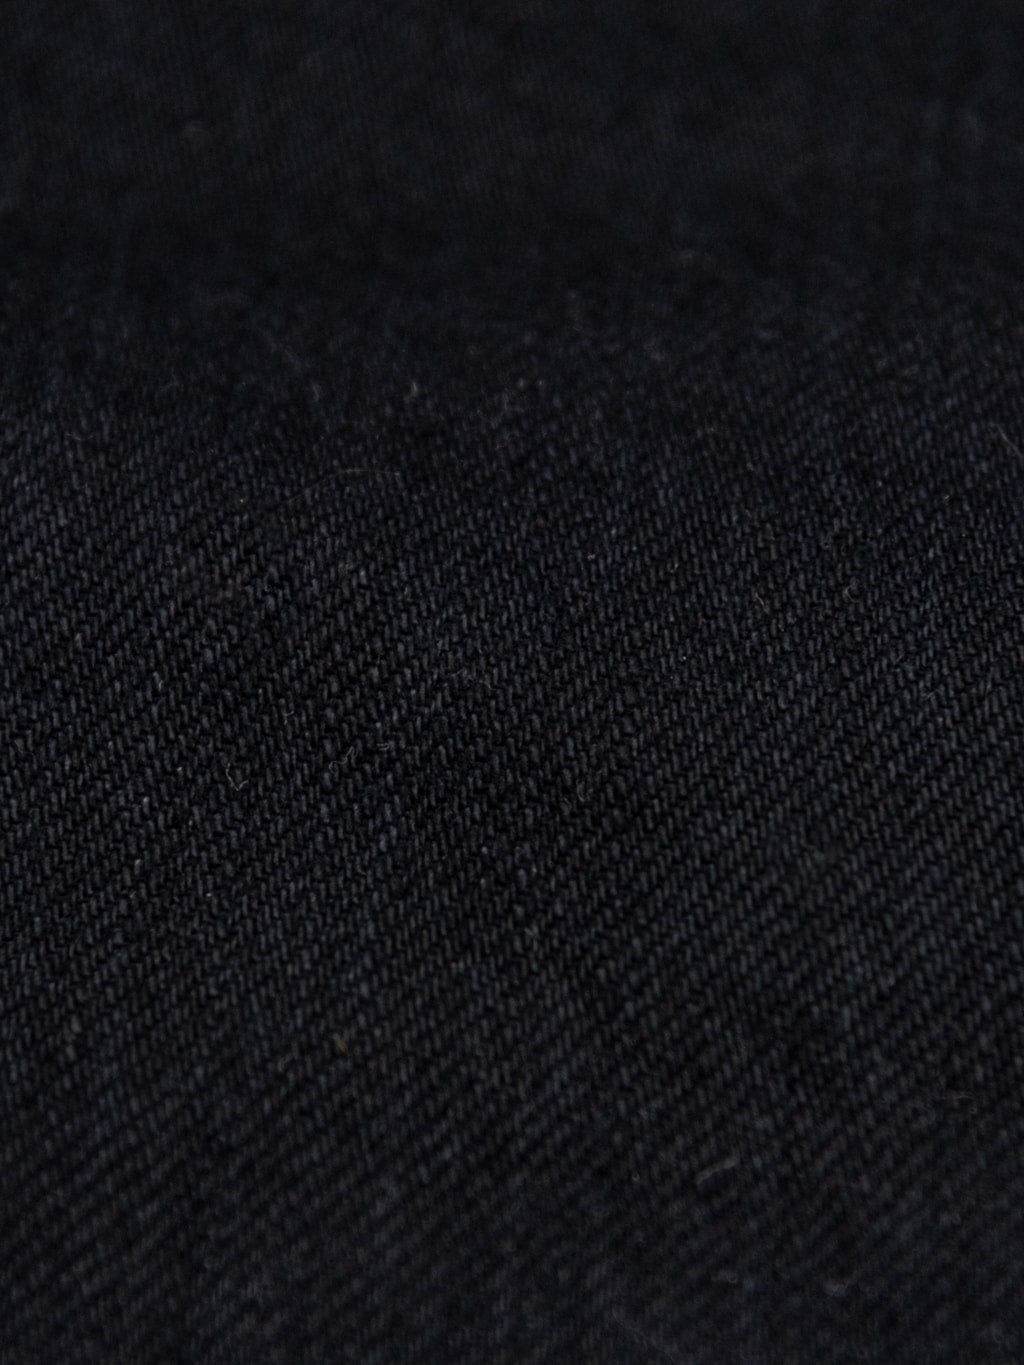 Sugar Cane Type III 13oz Black Denim Slim Jeans texture